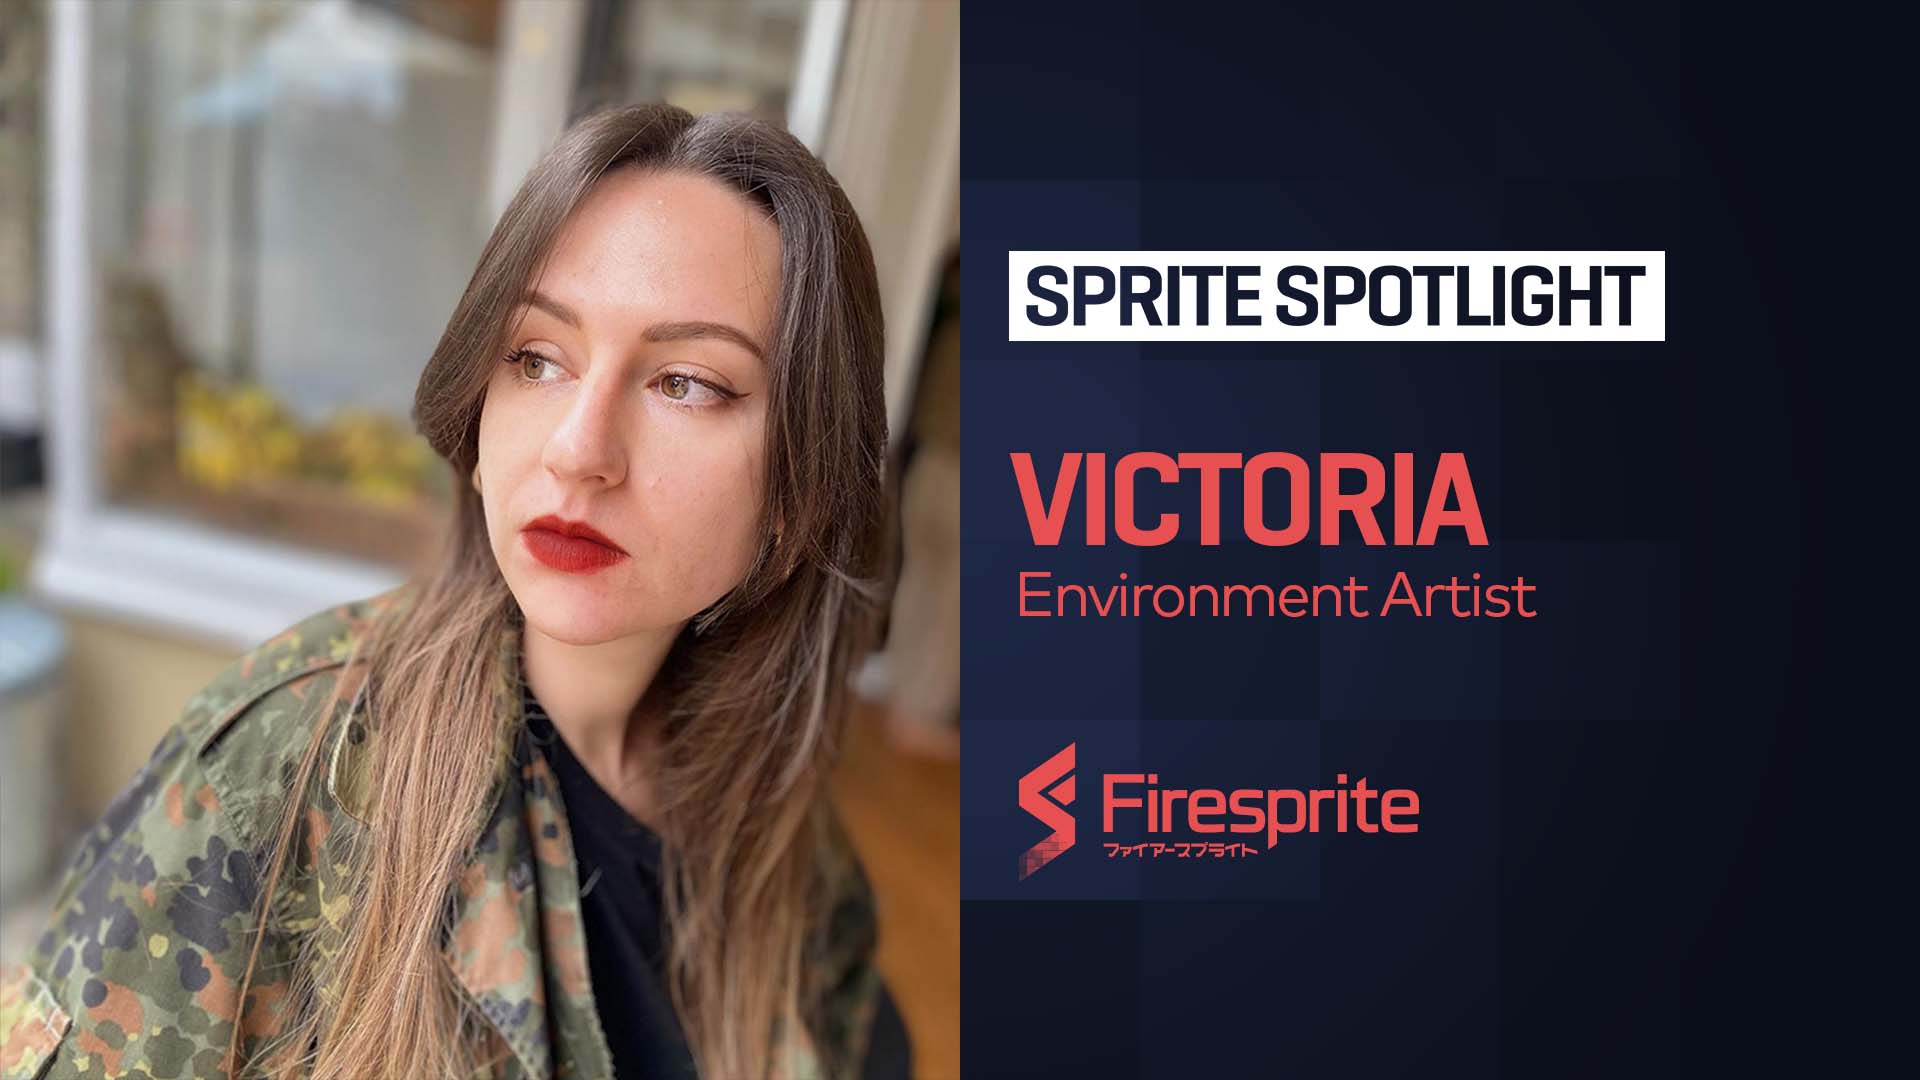 Meet the Sprites: Victoria 